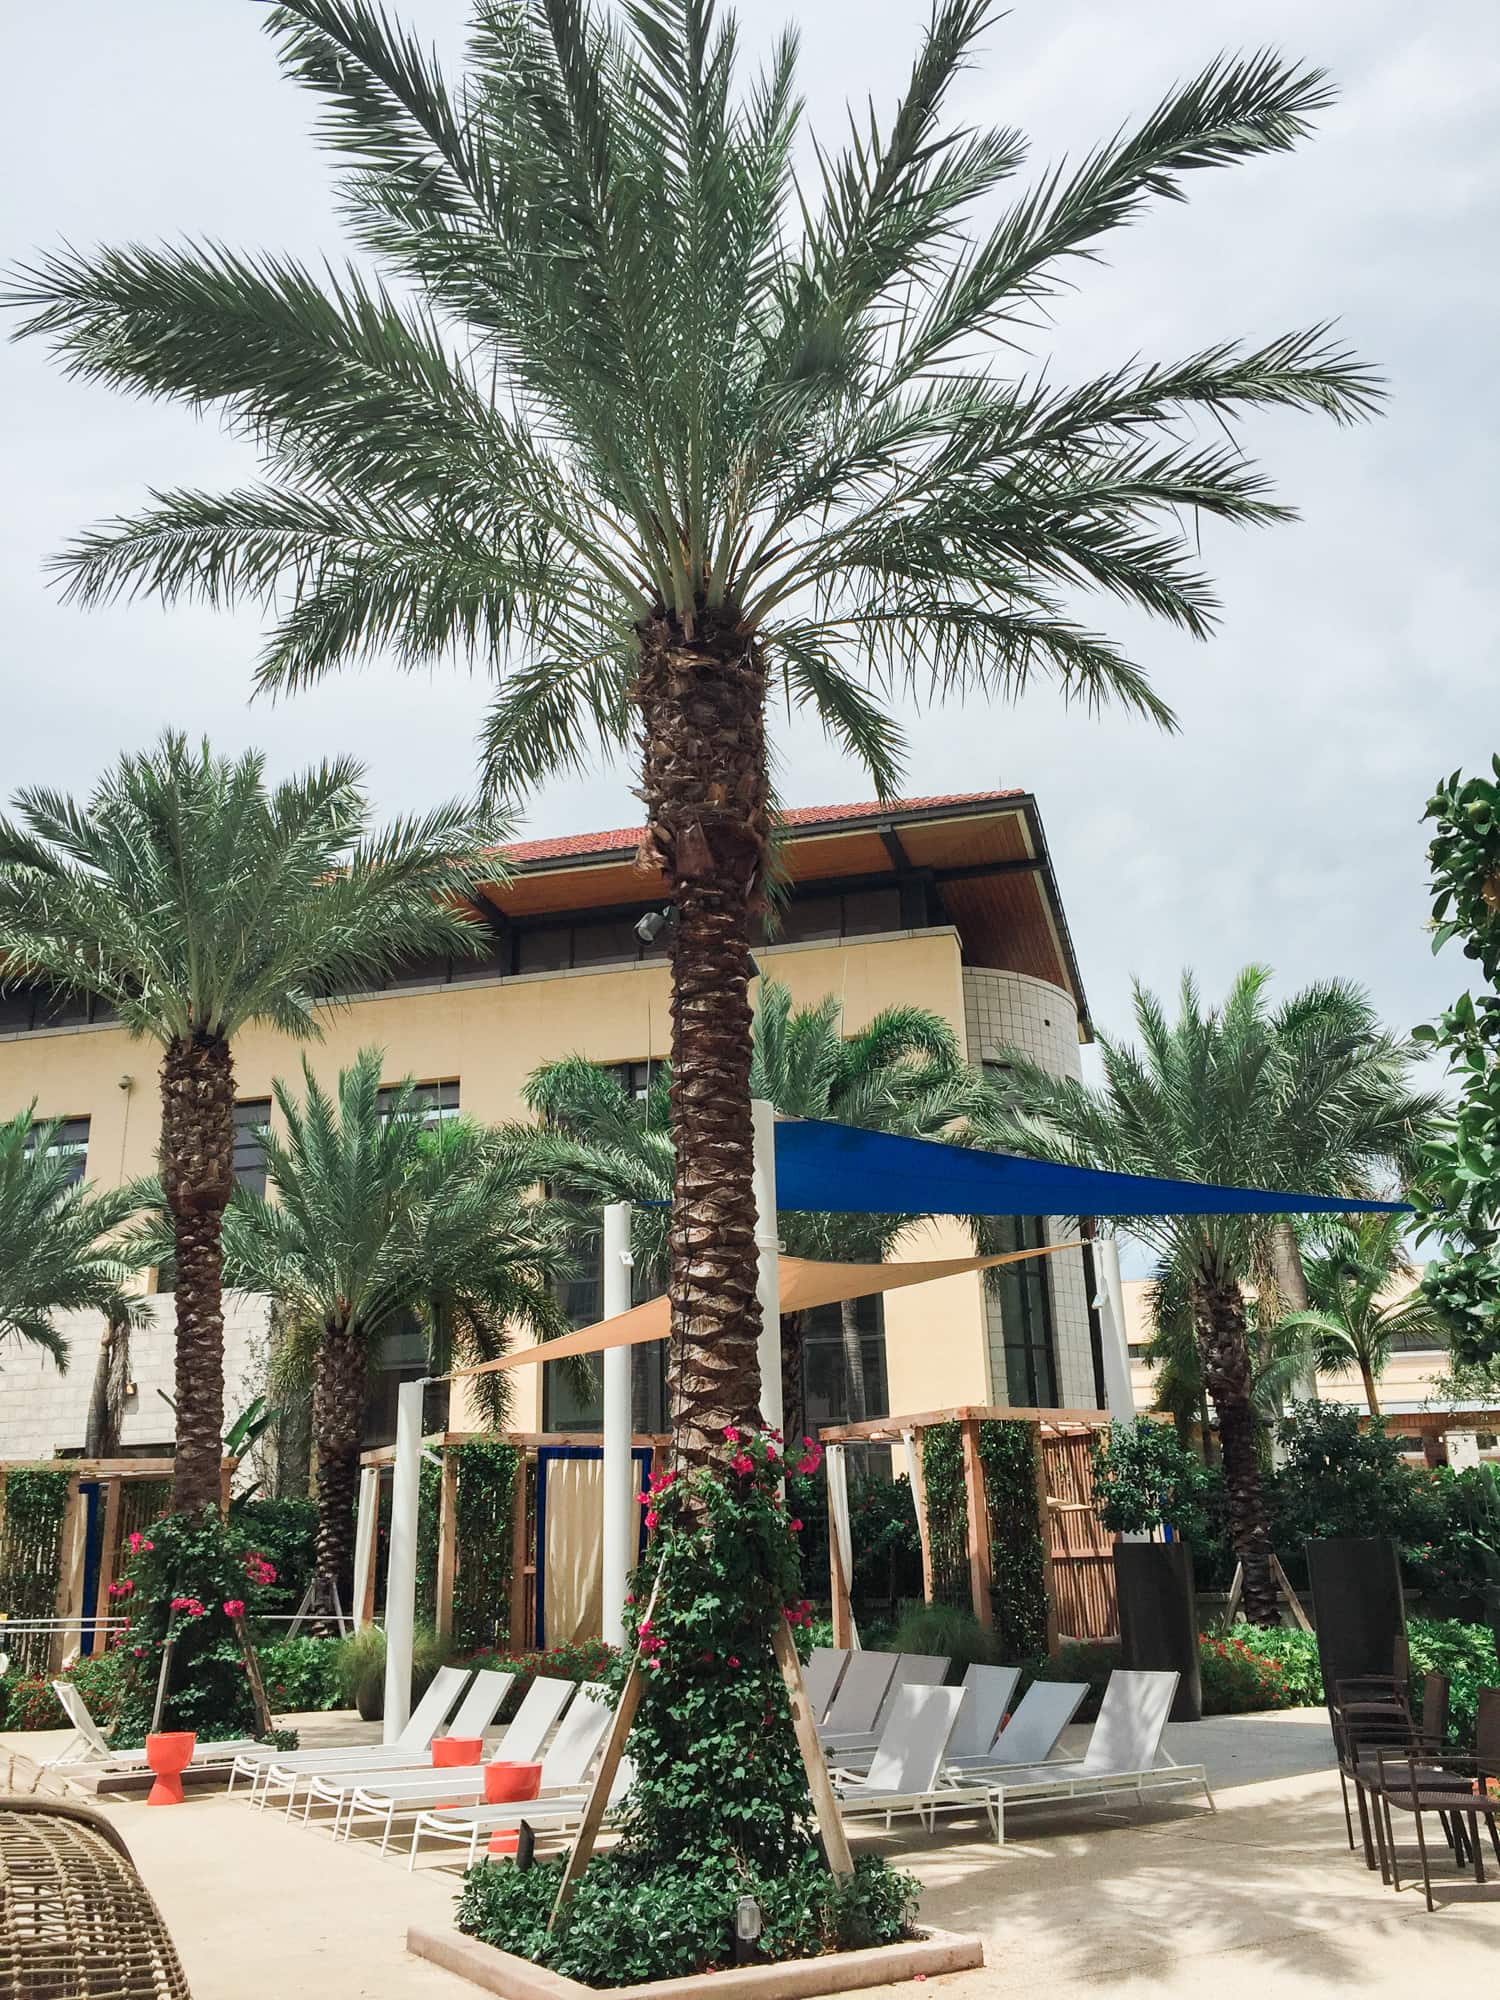 Hilton West Palm Beach Hotel Review | Ashley Brooke Nicholas